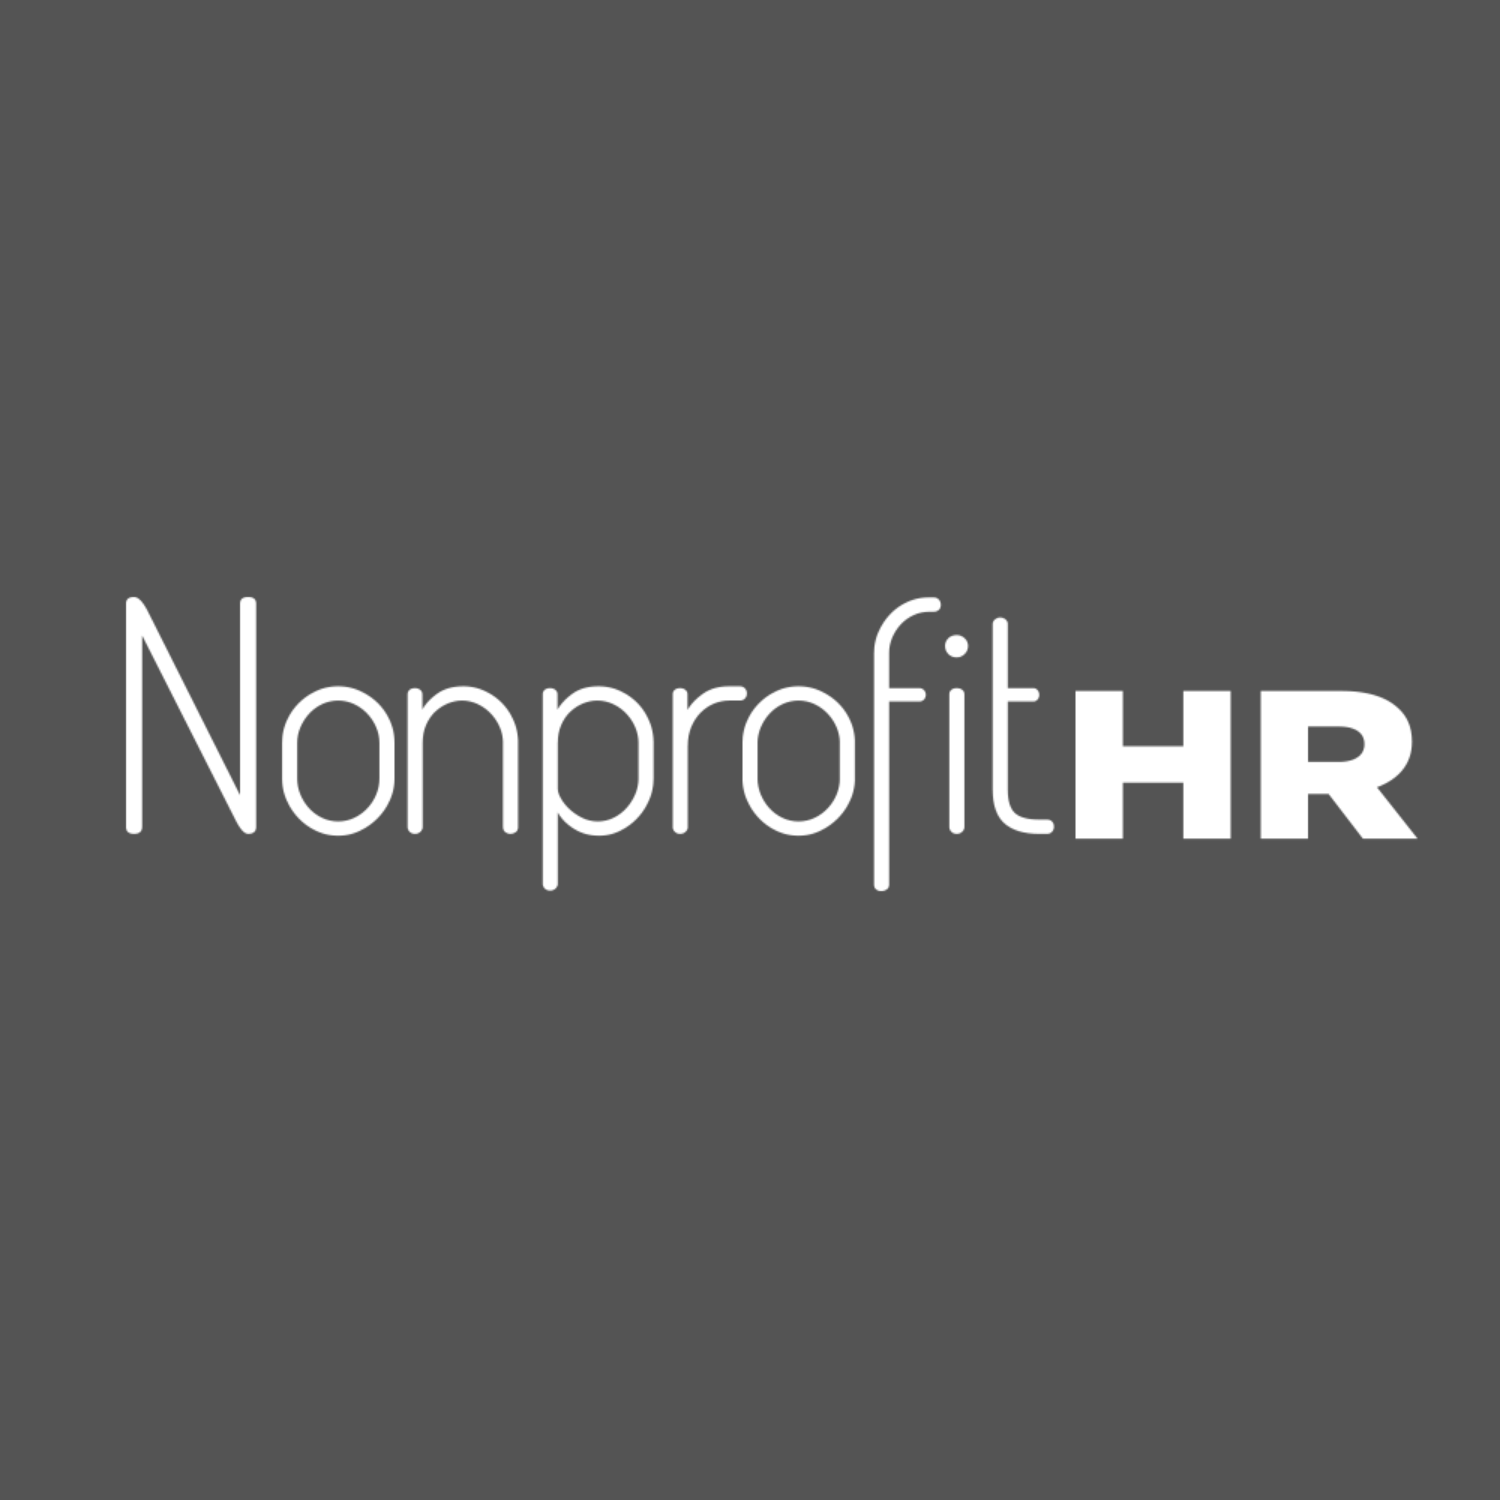 Nonprofit HR's Logo